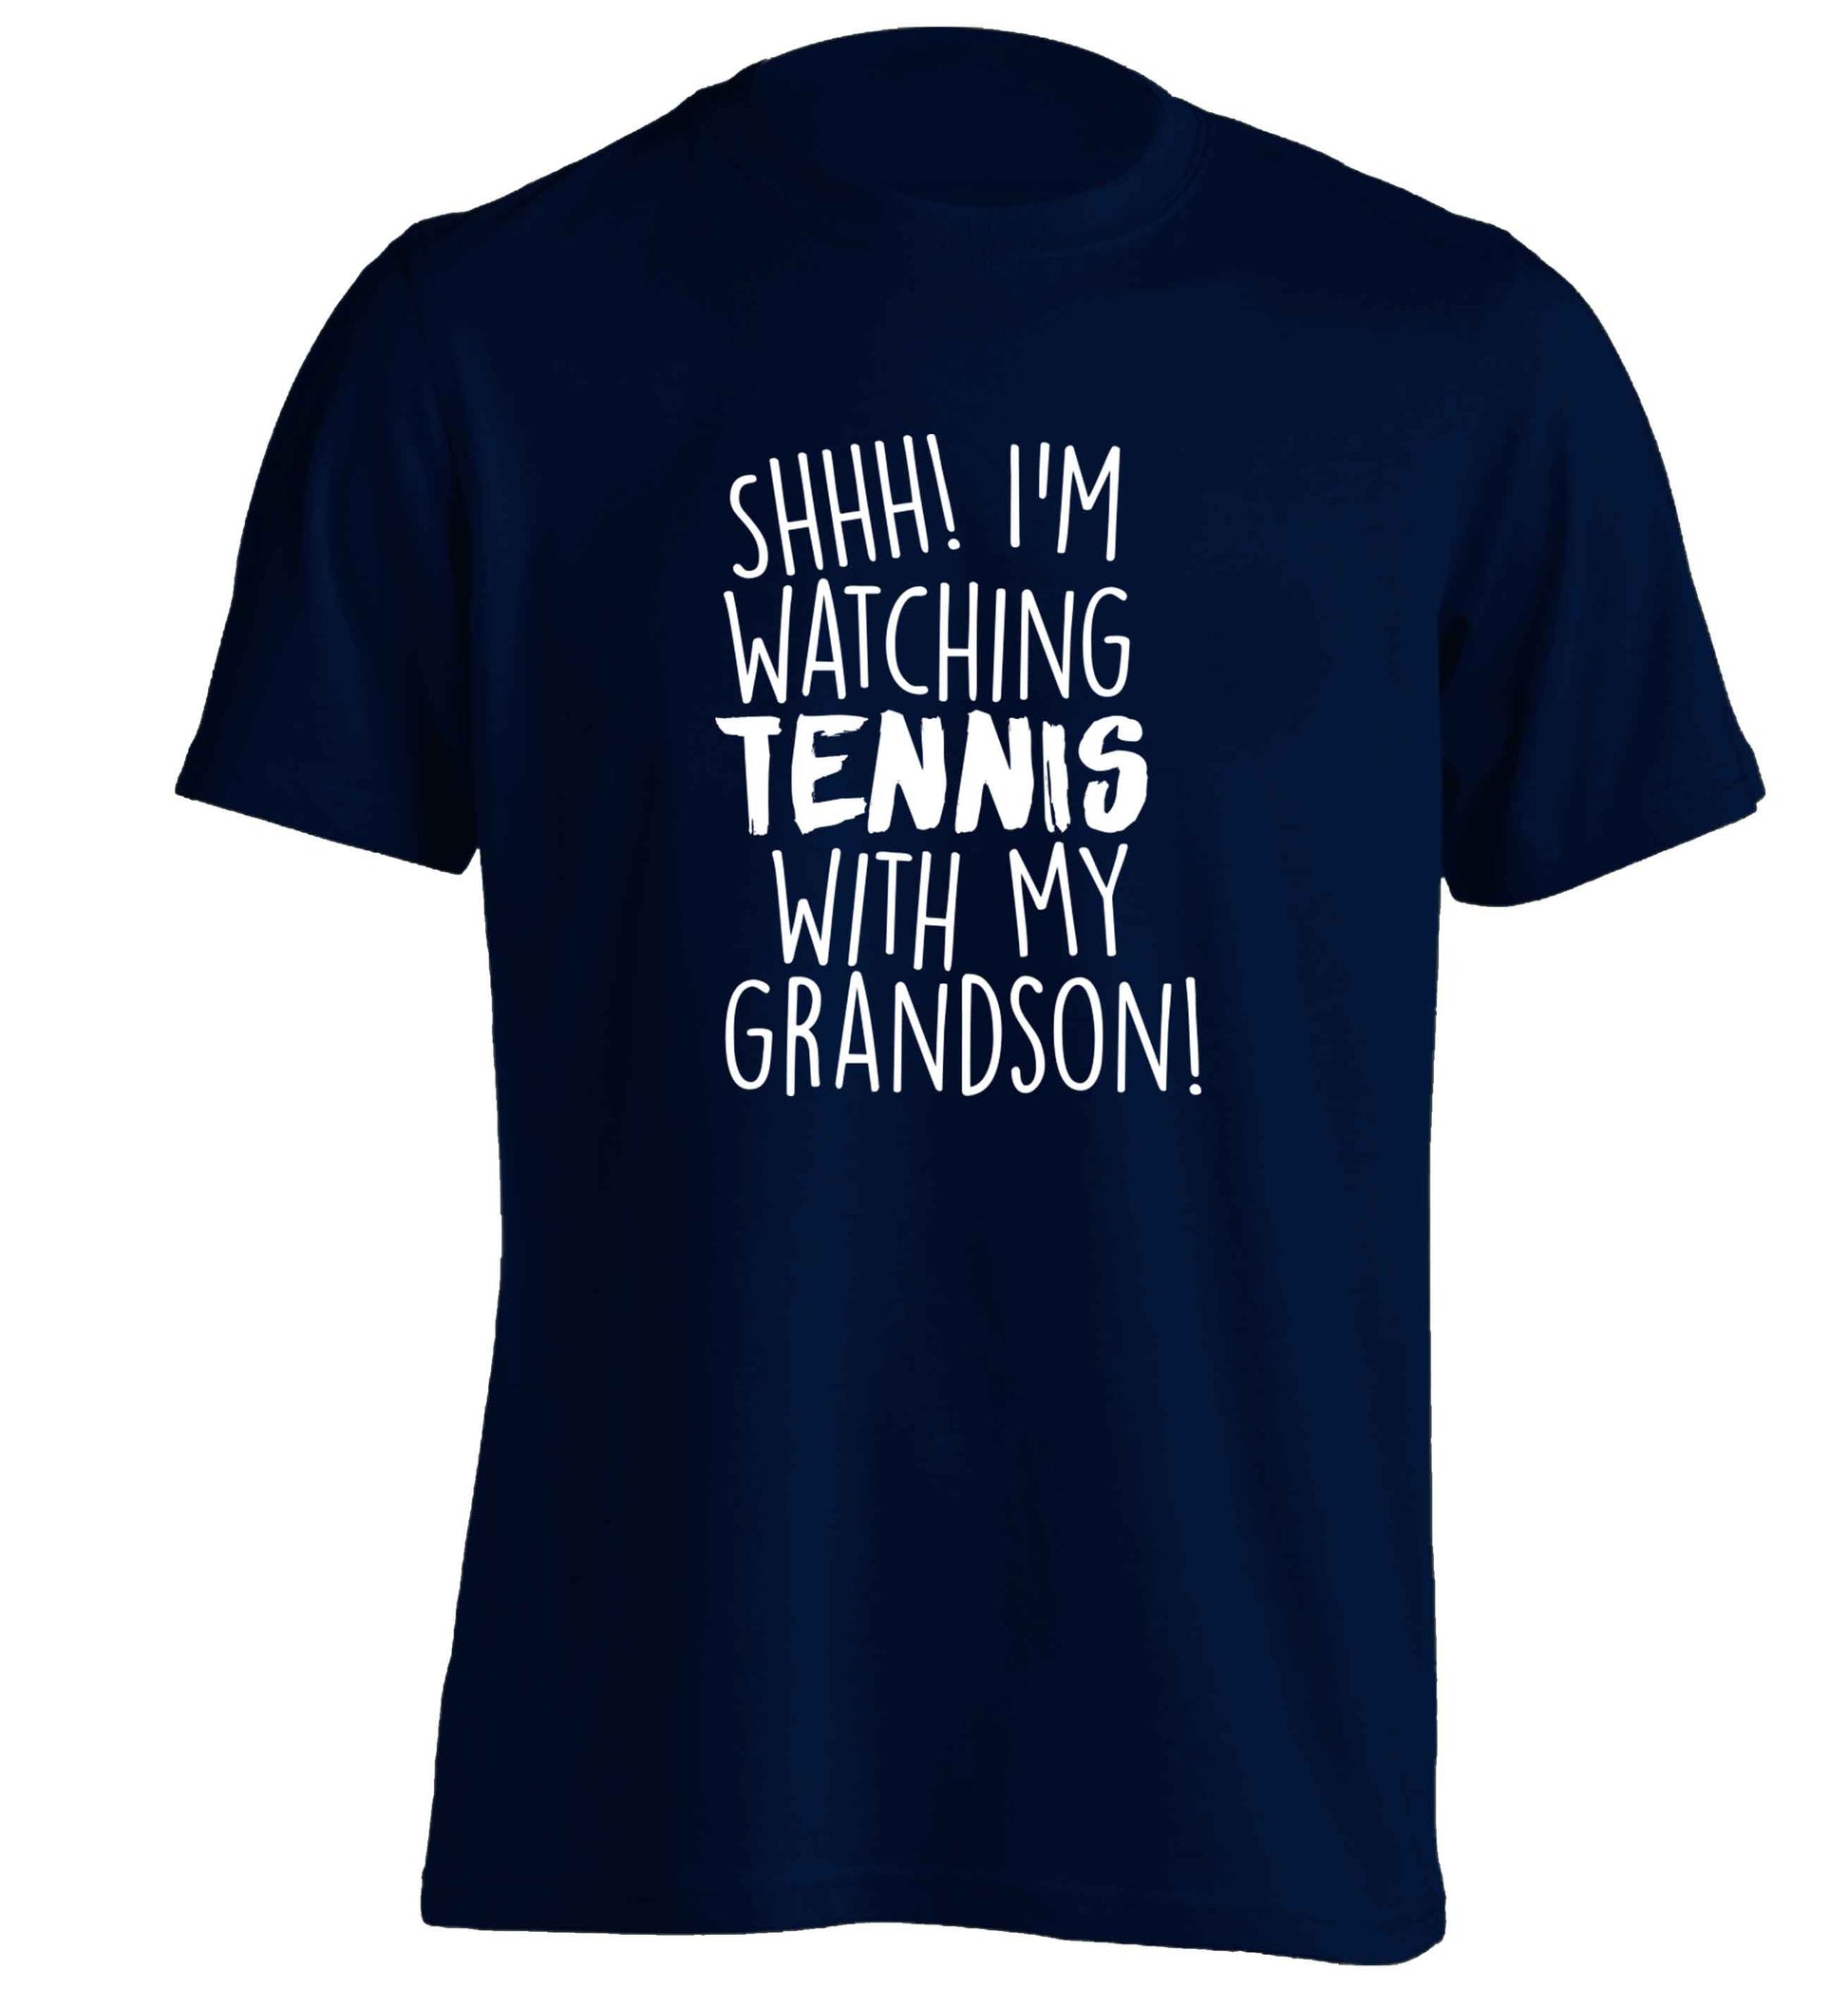 Shh! I'm watching tennis with my grandson! adults unisex navy Tshirt 2XL